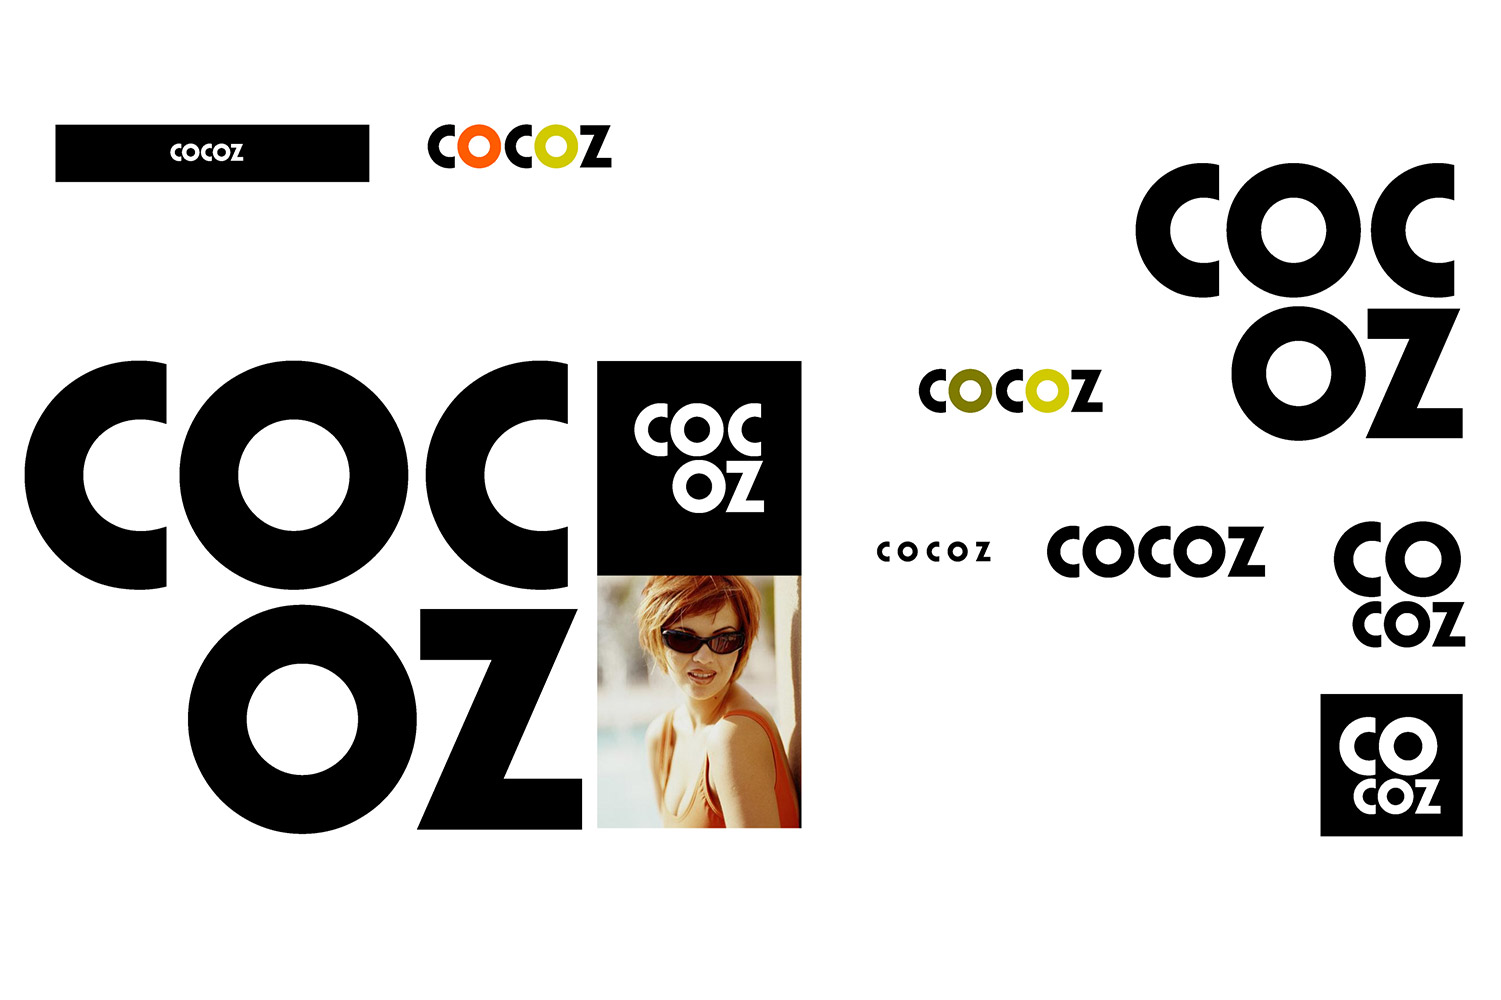 COCOZ logo design image